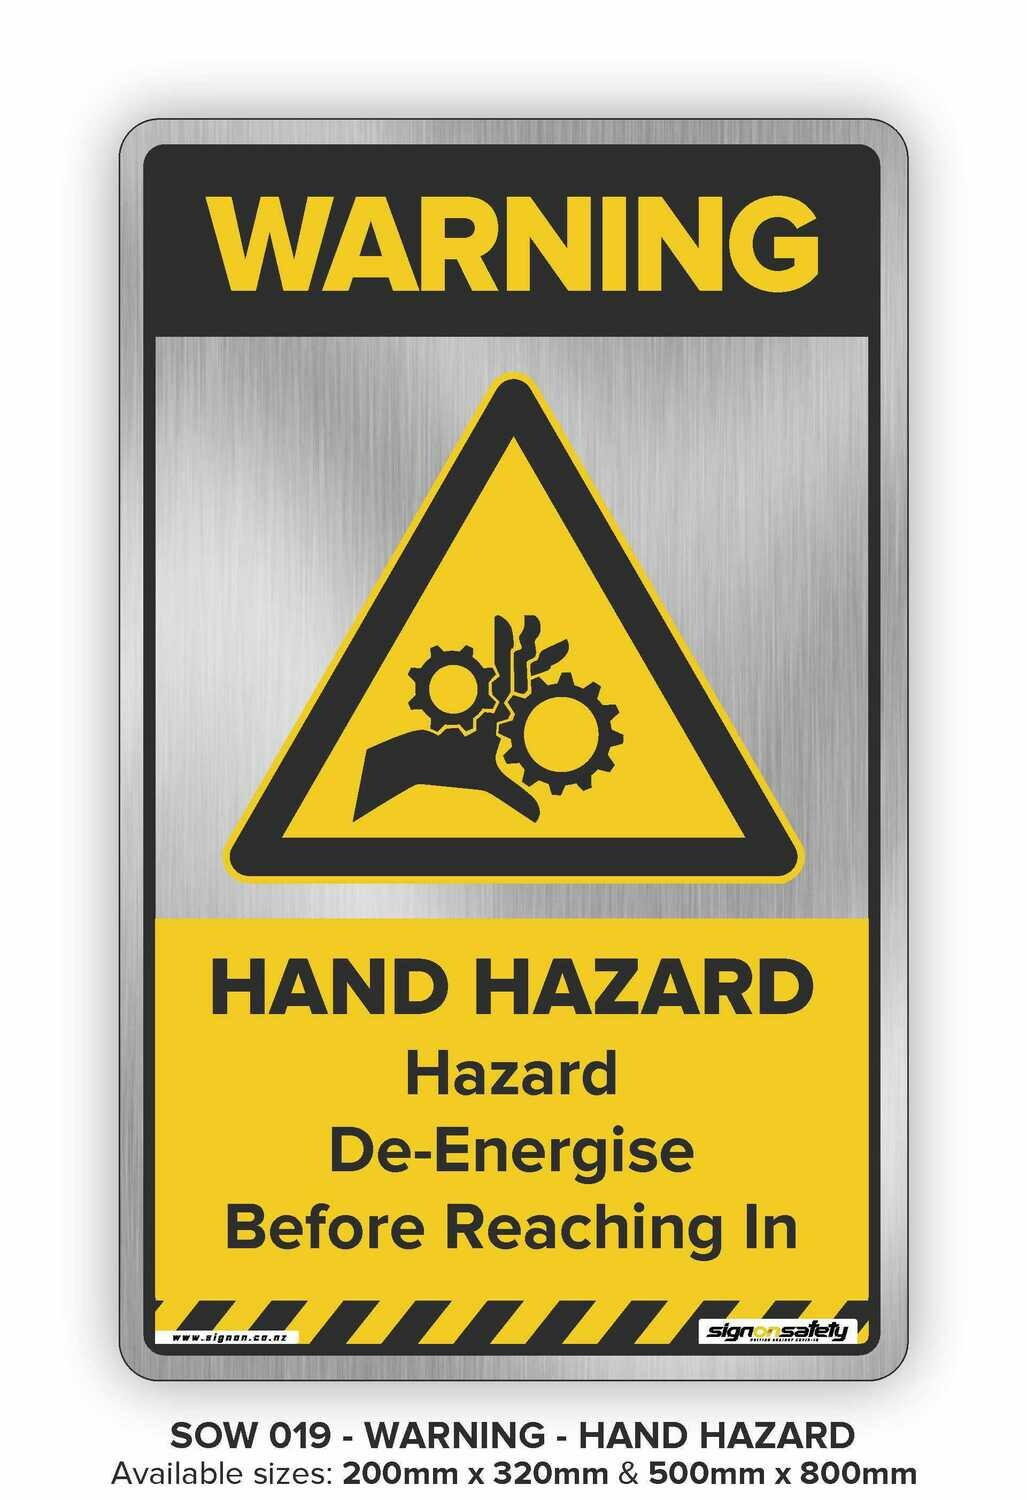 Warning - Hand Hazard